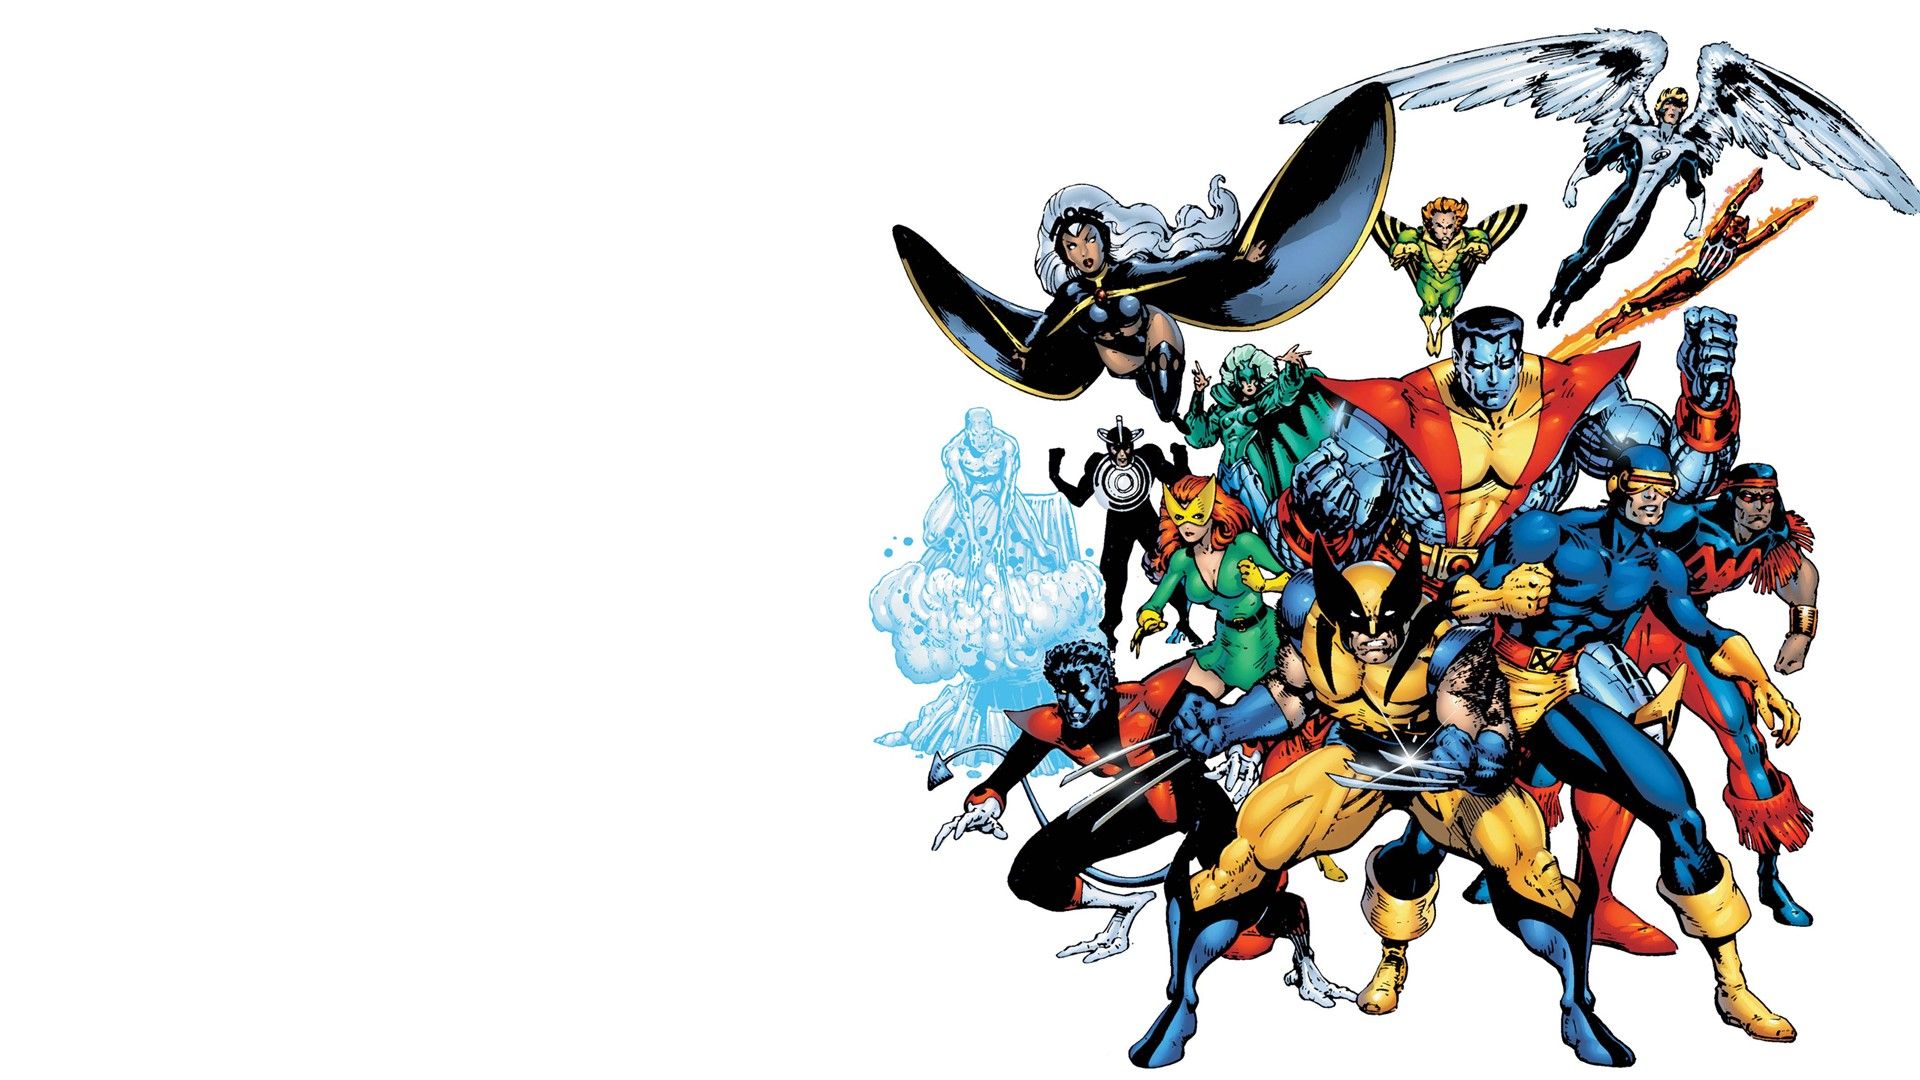 Cyclops Marvel Comics Nightcrawler Marvel Comics Wolverine Wallpaper:1920x1080